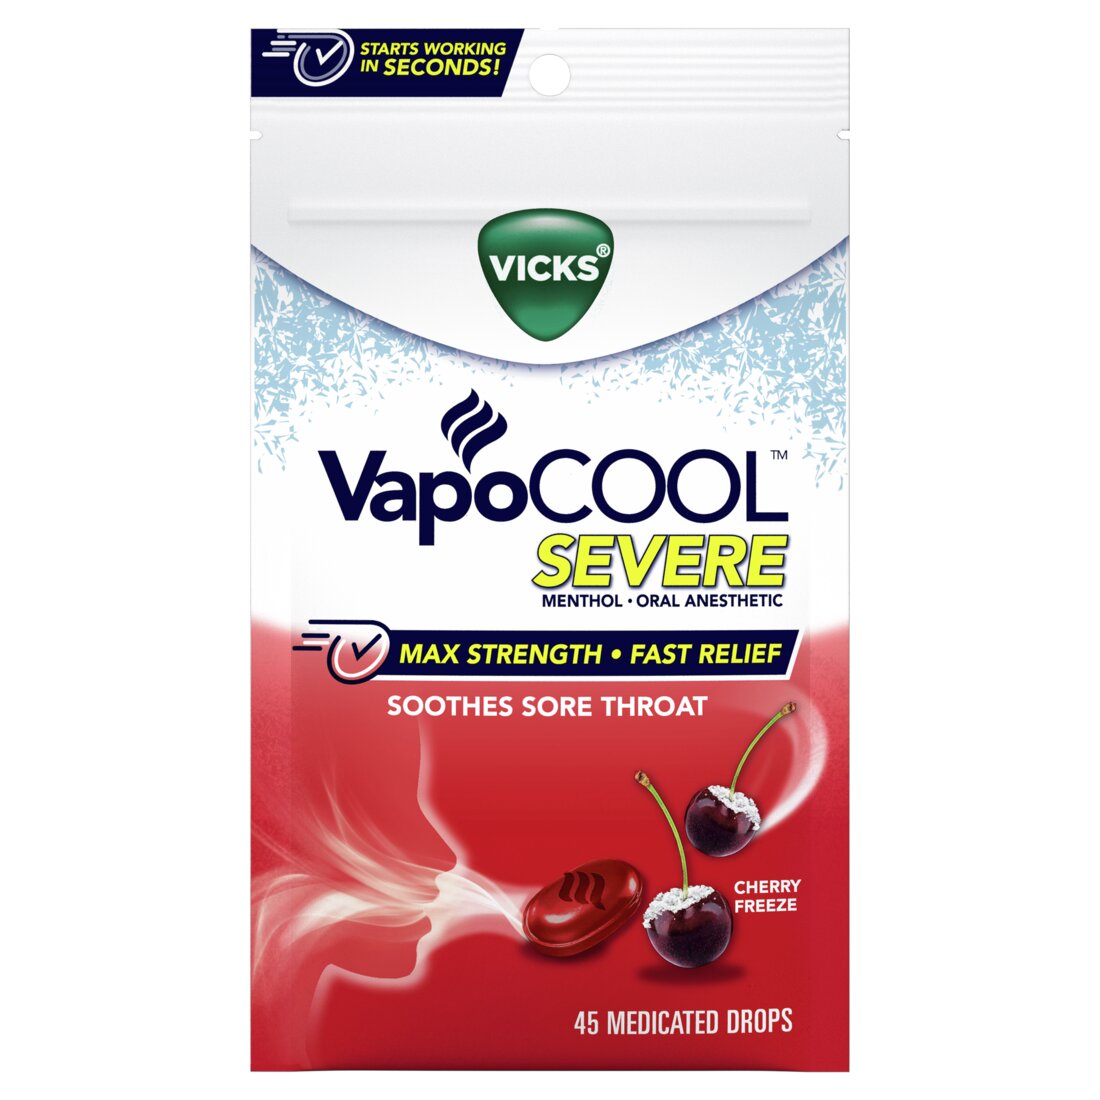 Vicks VapoCOOL SEVERE Medicated Sore Throat Drops Cherry Freeze Flavor - 45ct/9pk